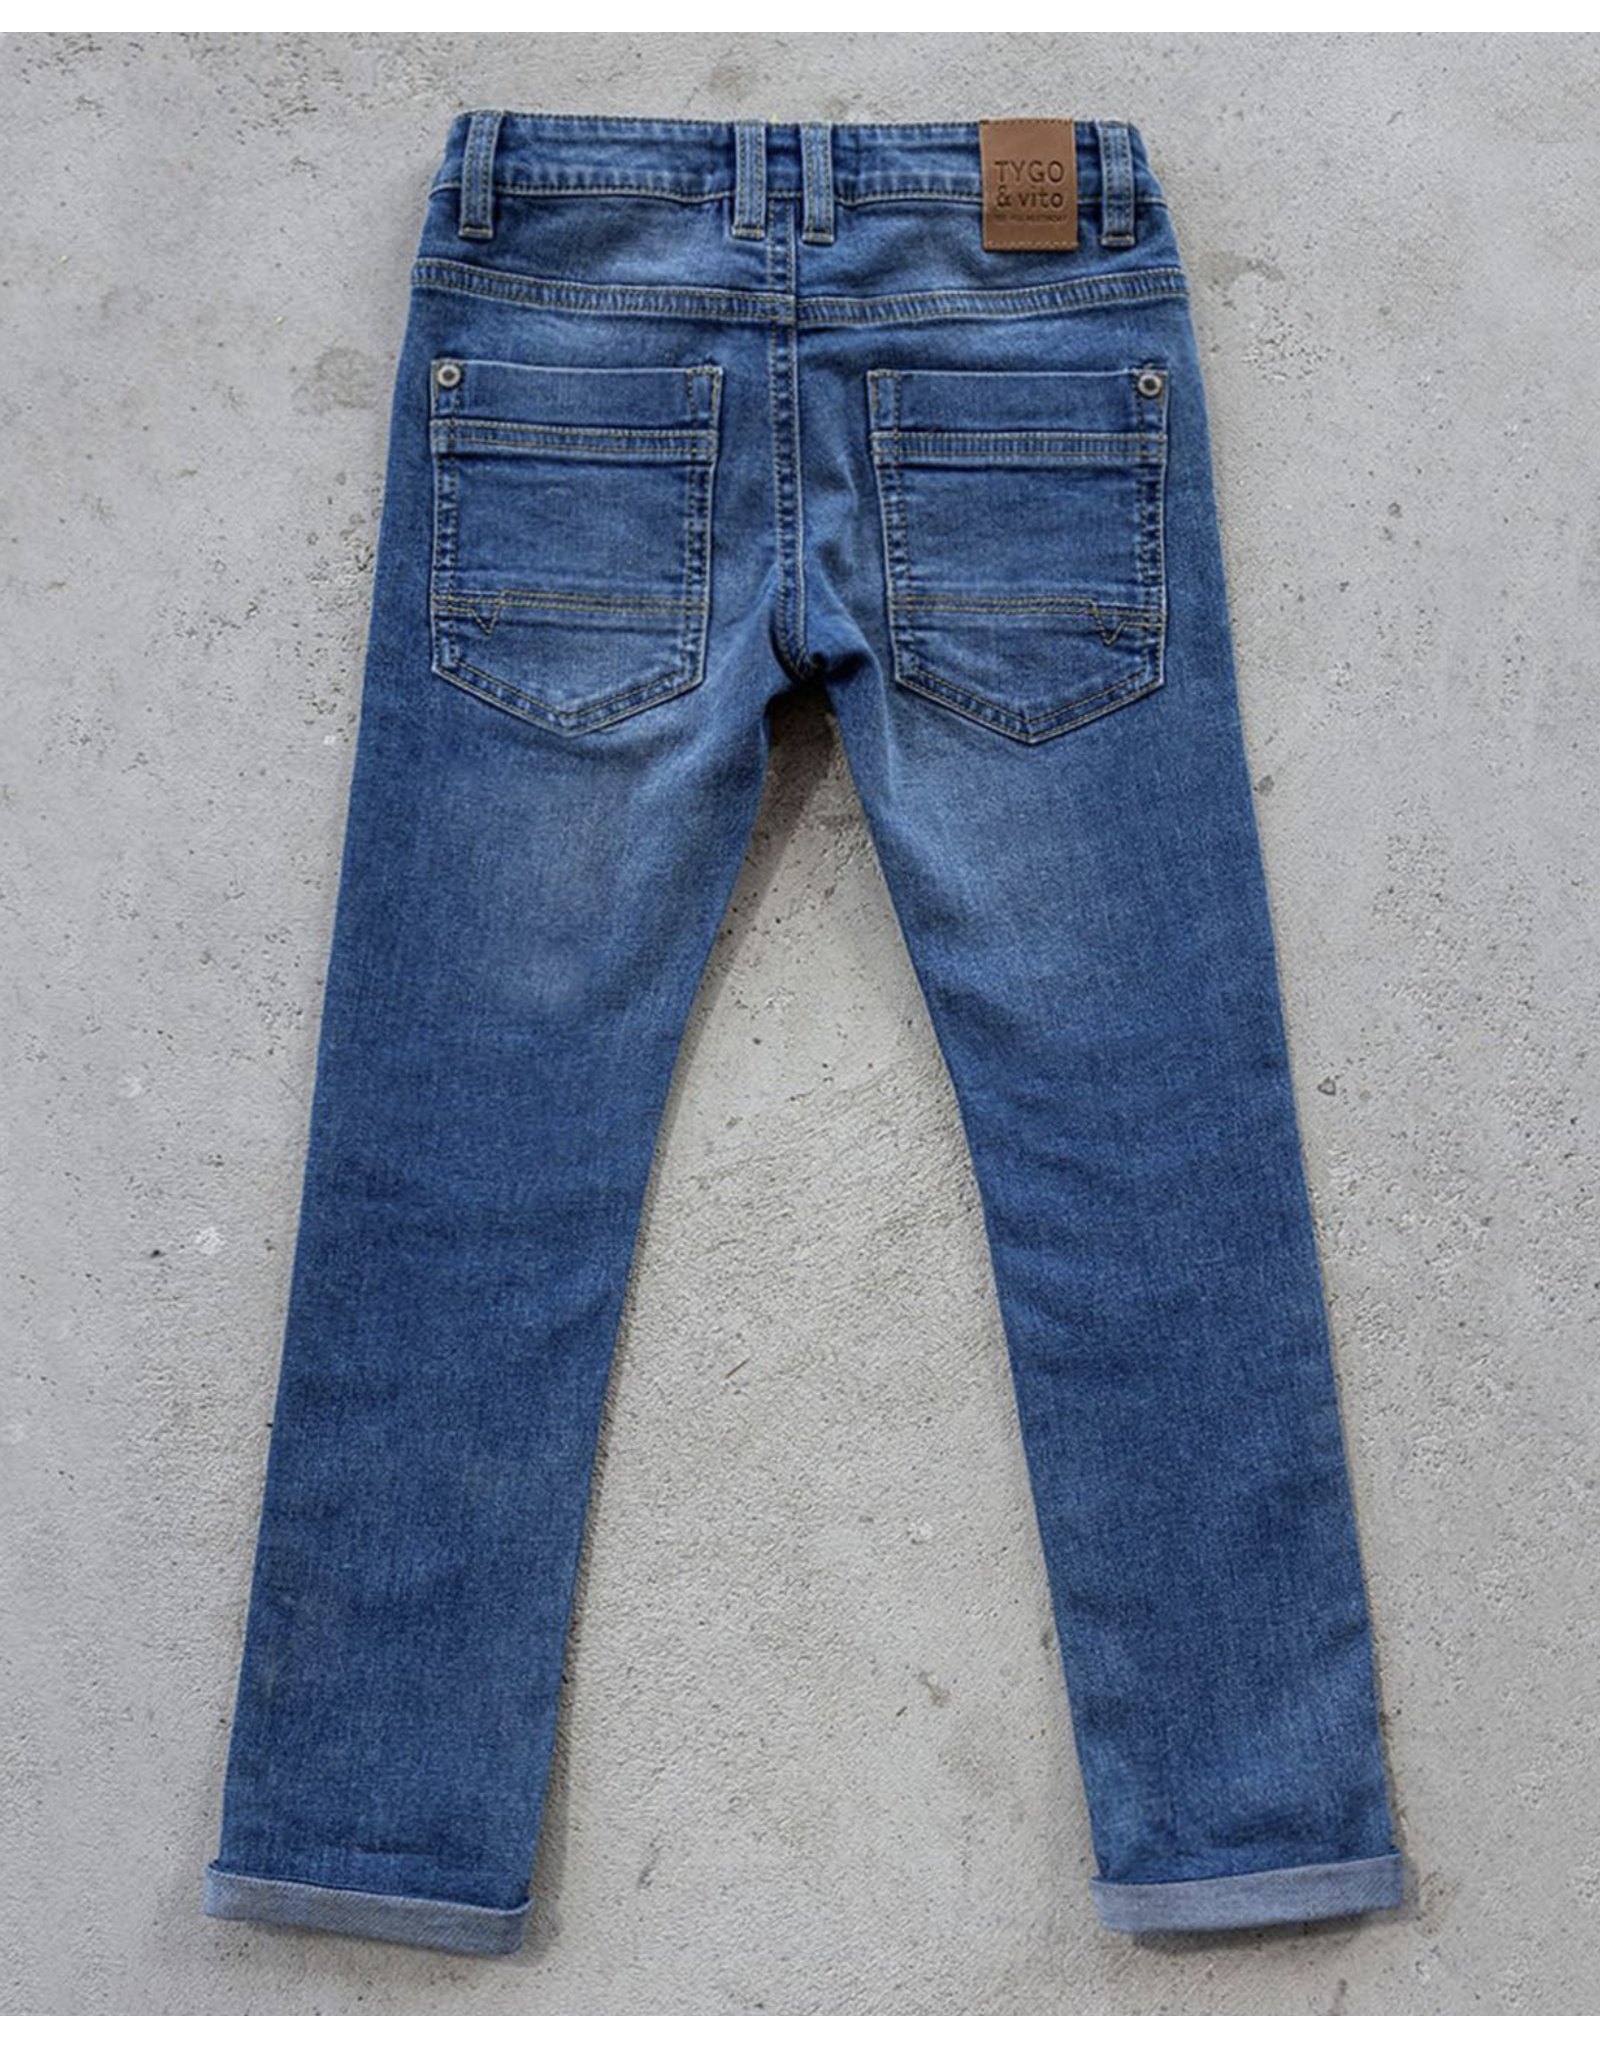 Tygo & vito Stretch Jeans skinny fit Binq Medium Used 802 NOS